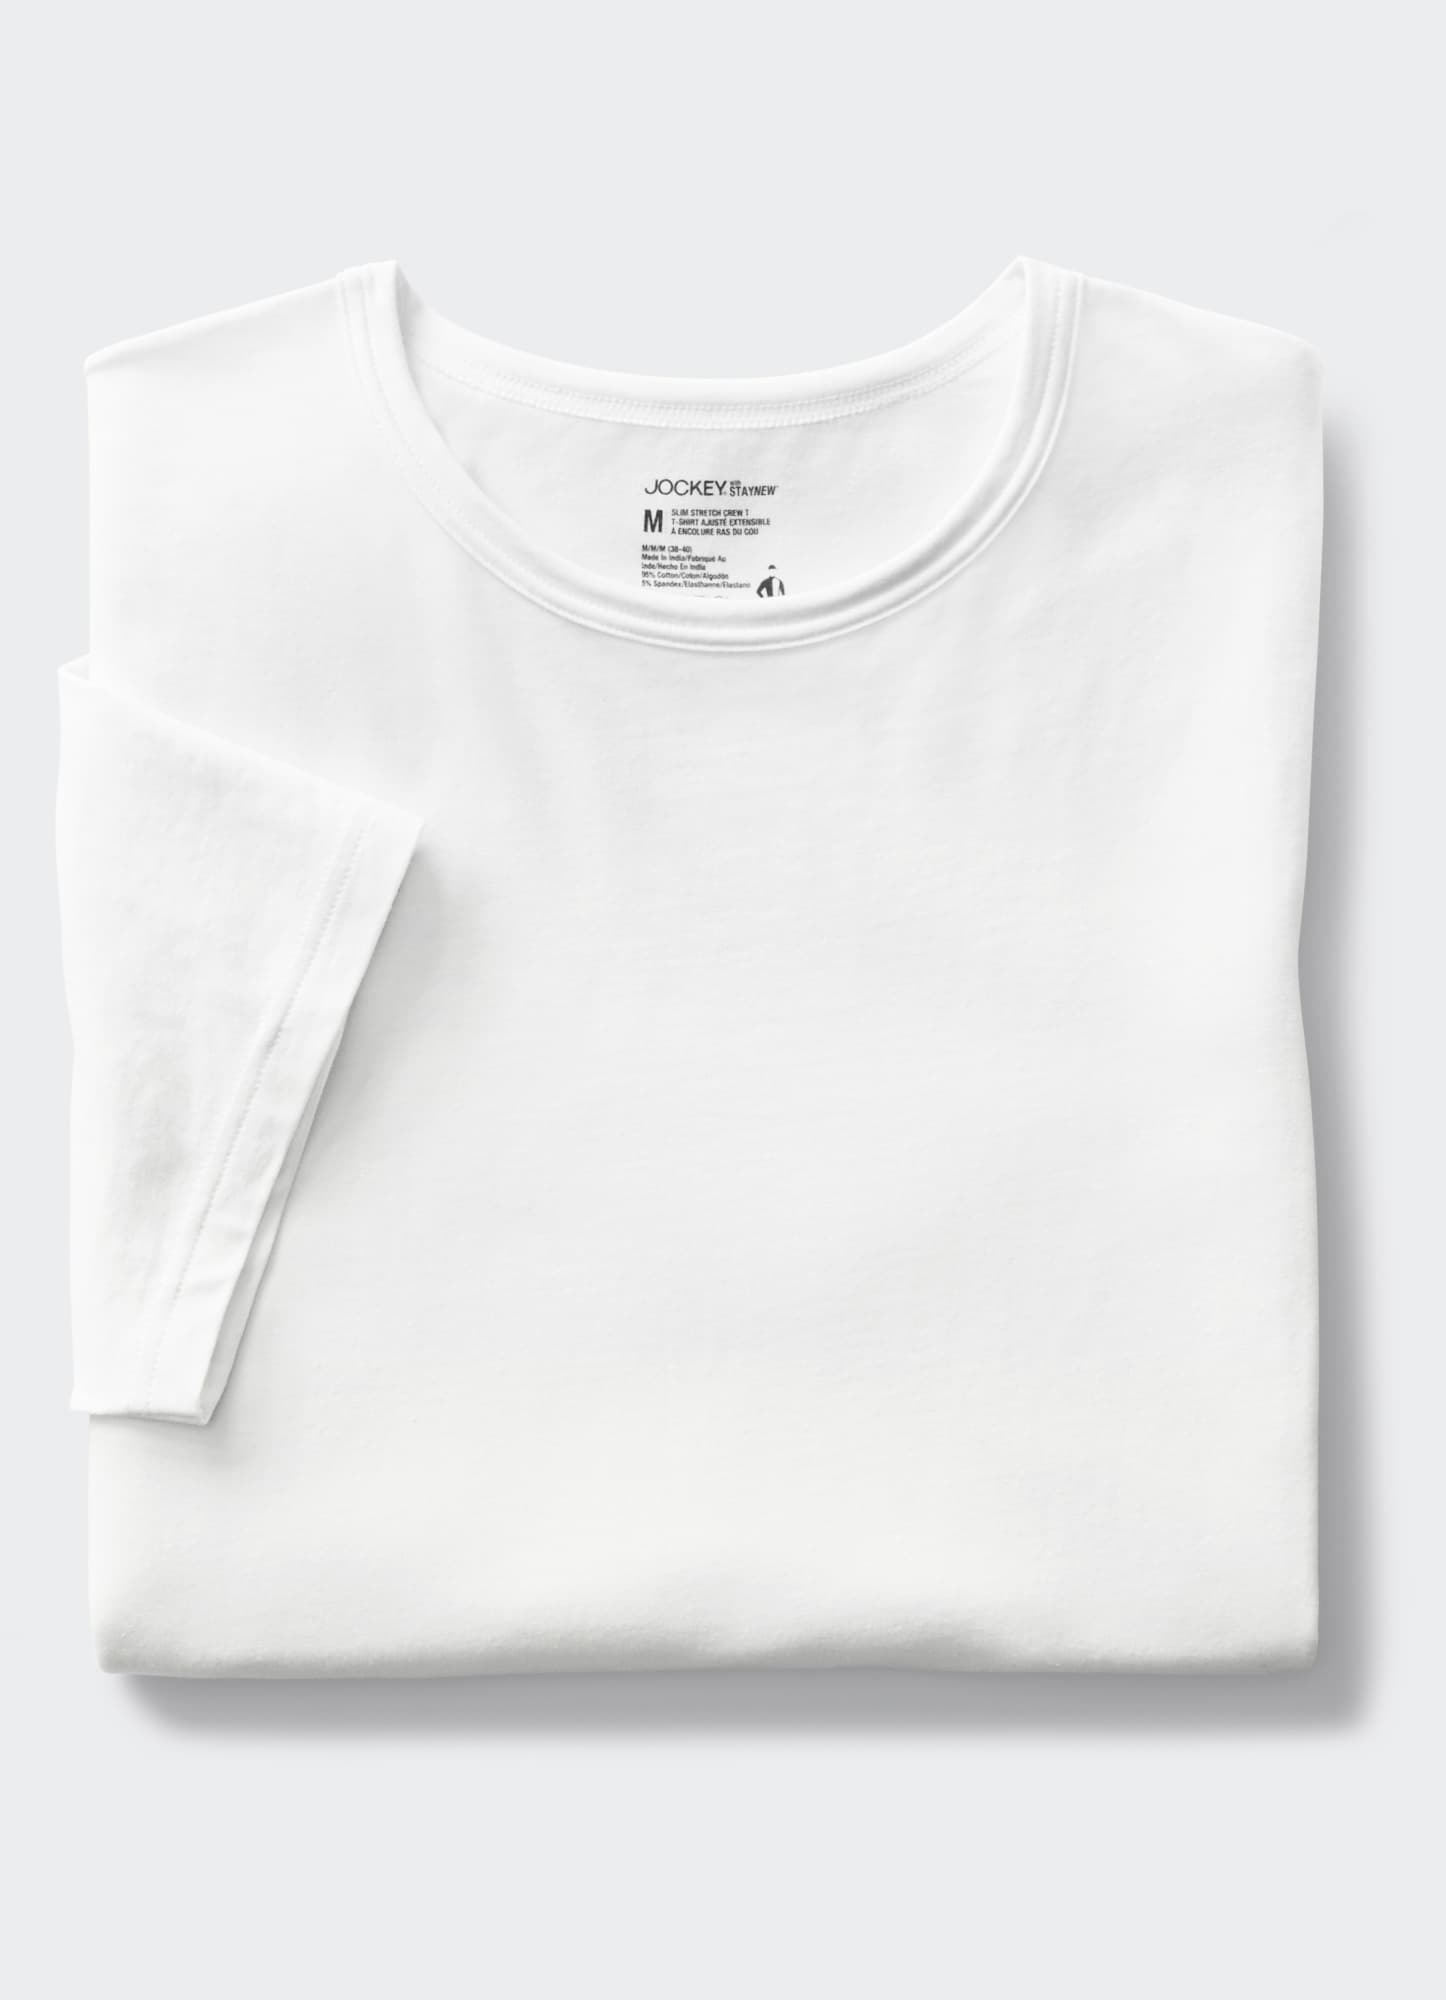 Laydown of Cotton Stretch Crew Neck T-shirt